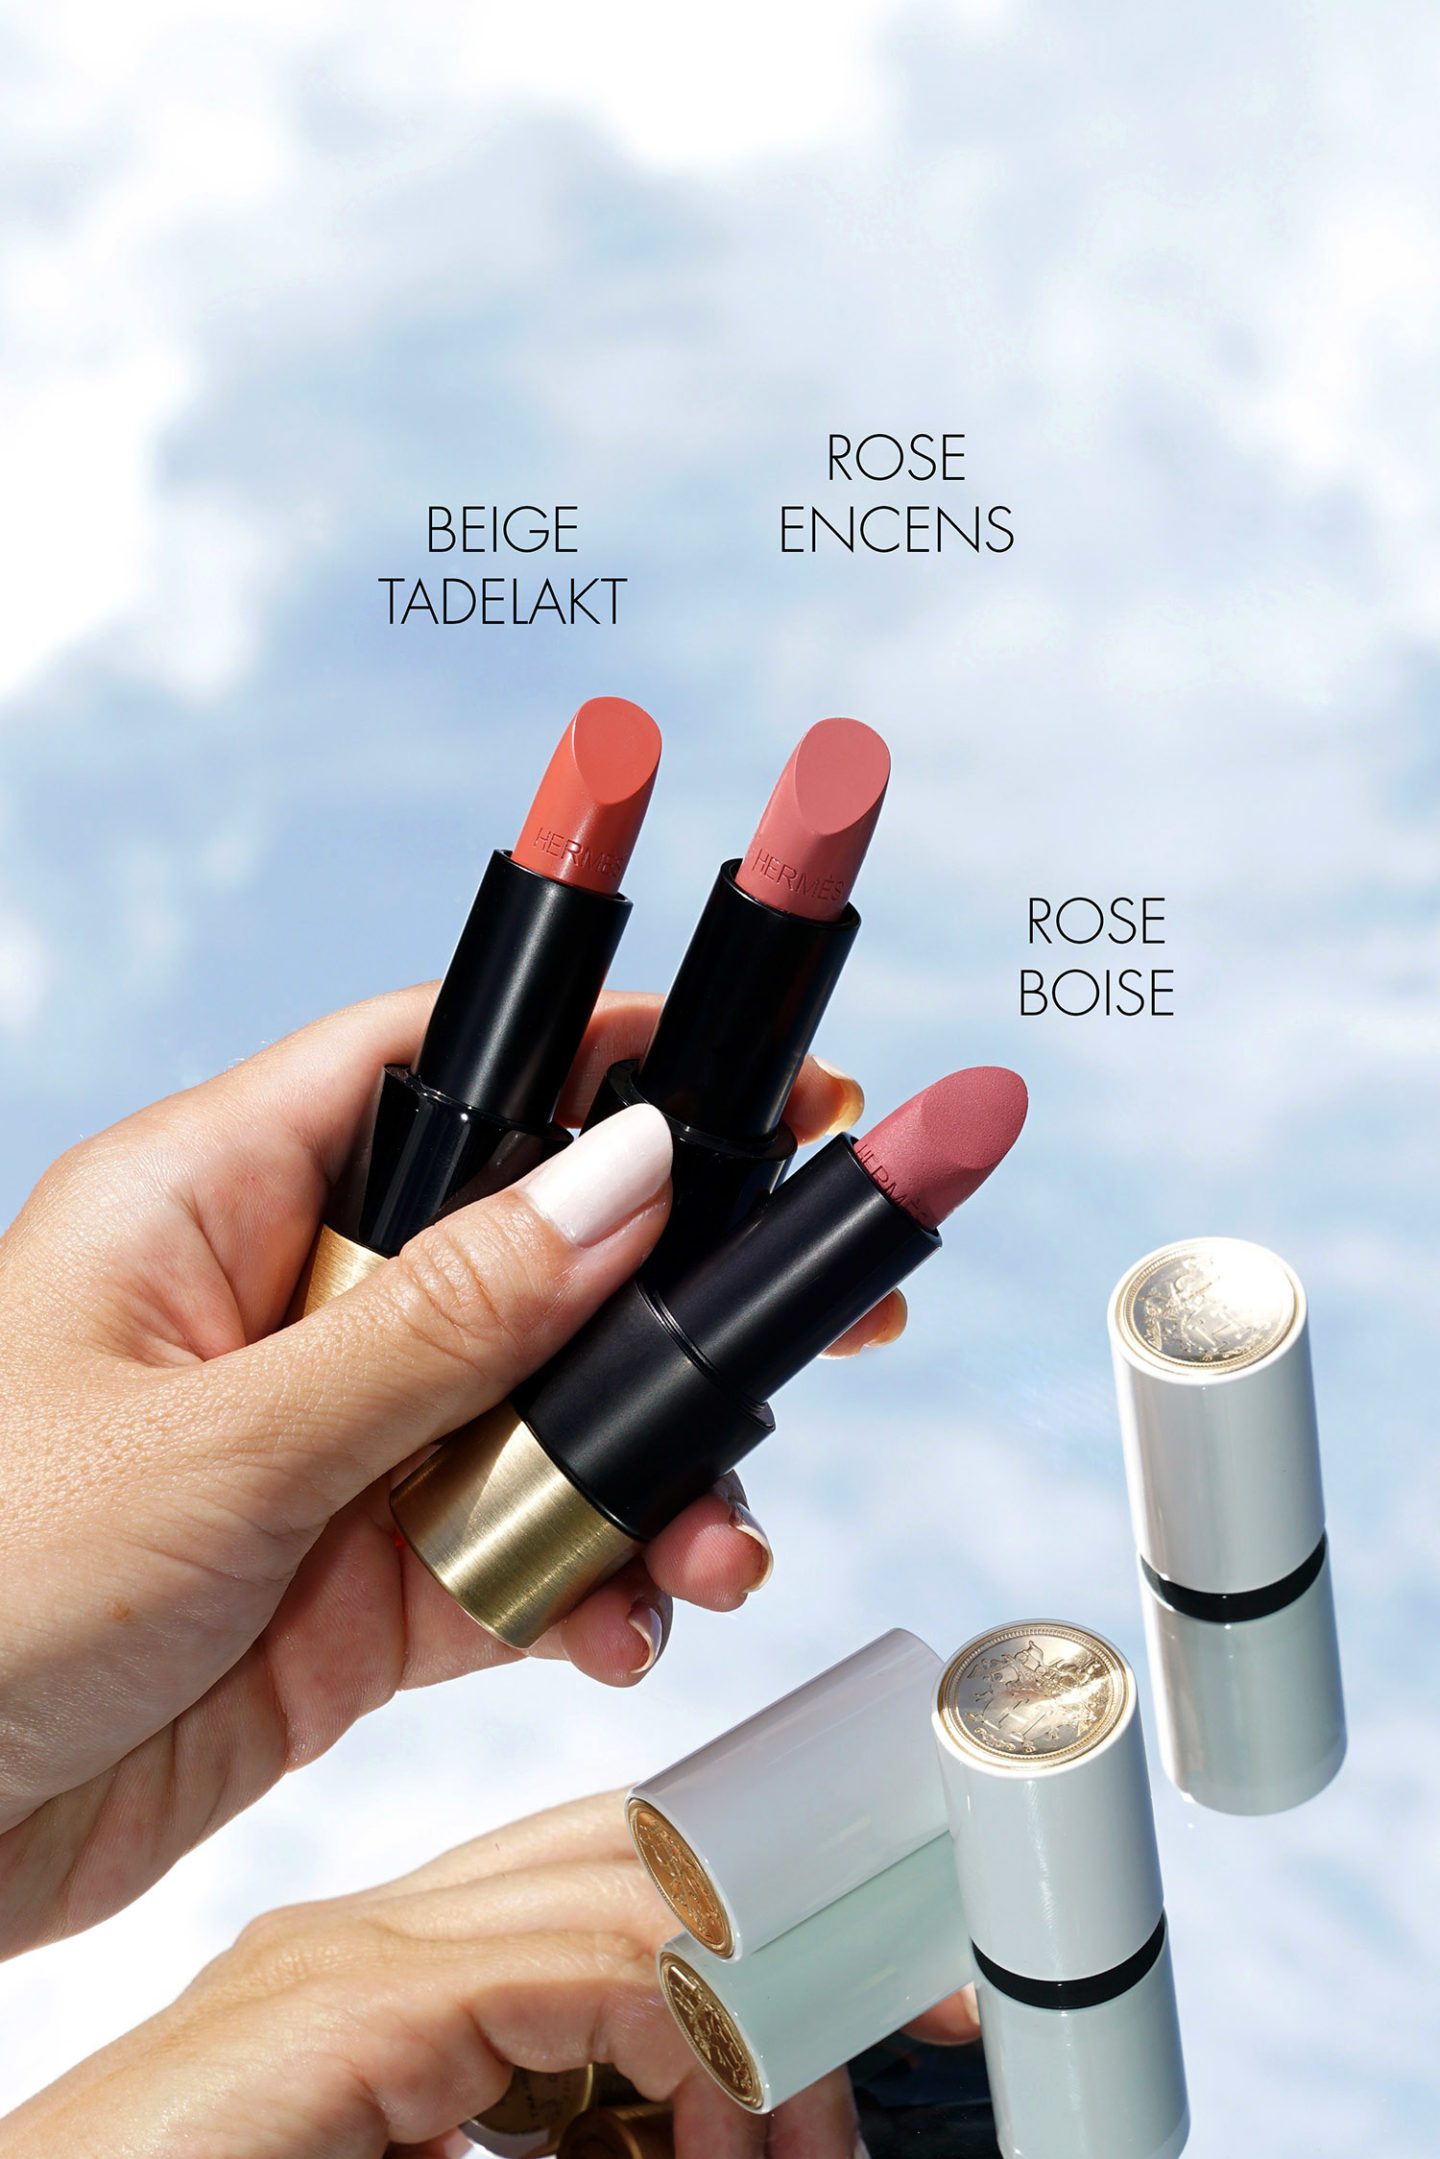 Hermes Lipstick Beige Tadelakt, Rose Encens, Rose Boise Review